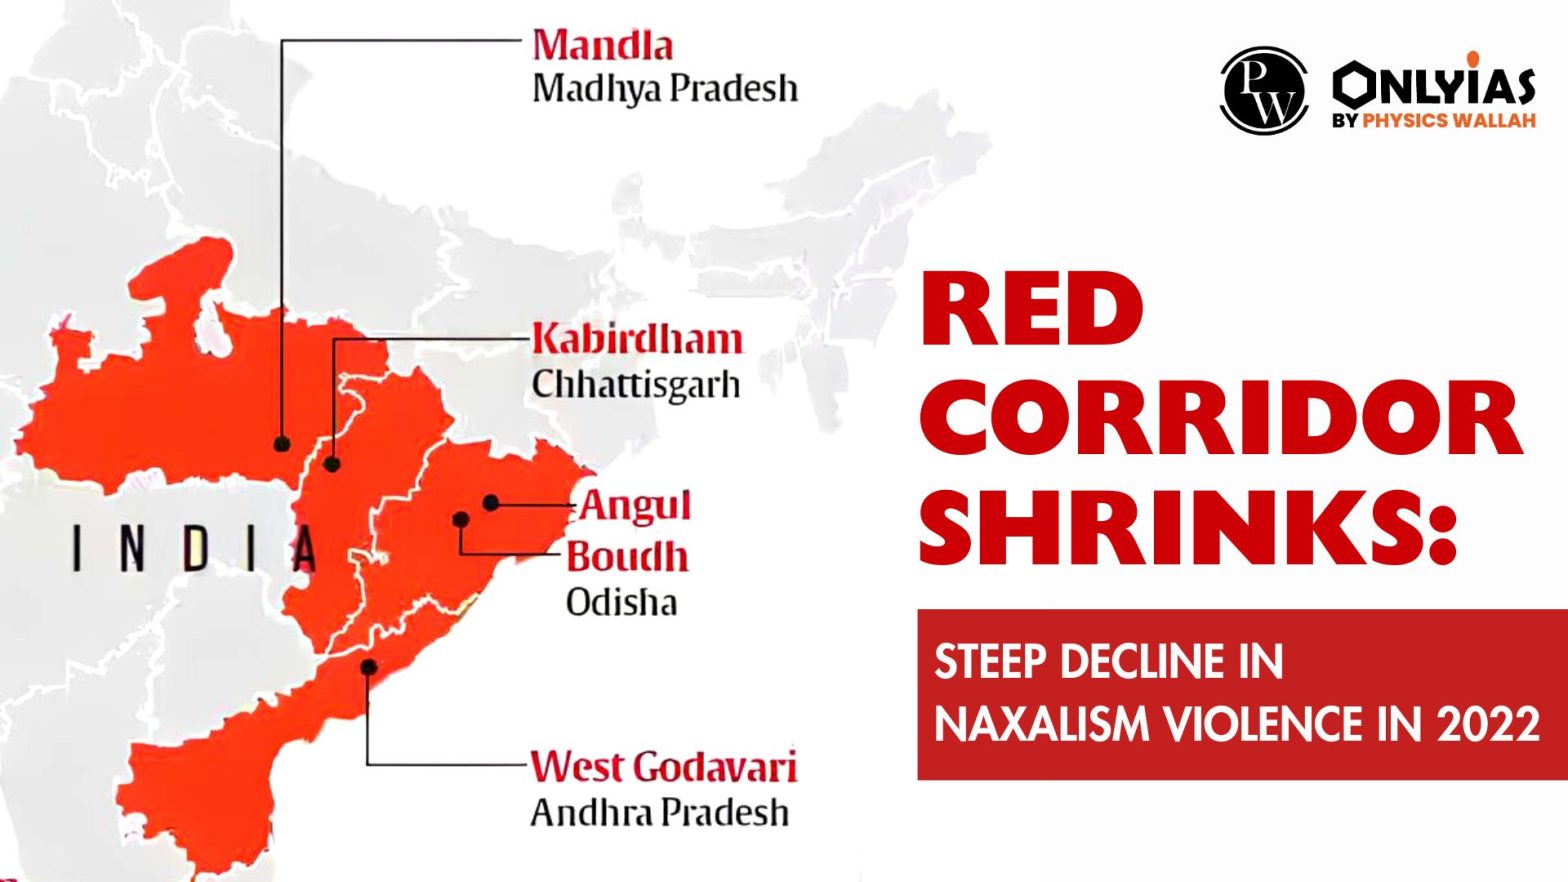 Red Corridor Shrinks: Steep Decline in Naxalism Violence in 2022